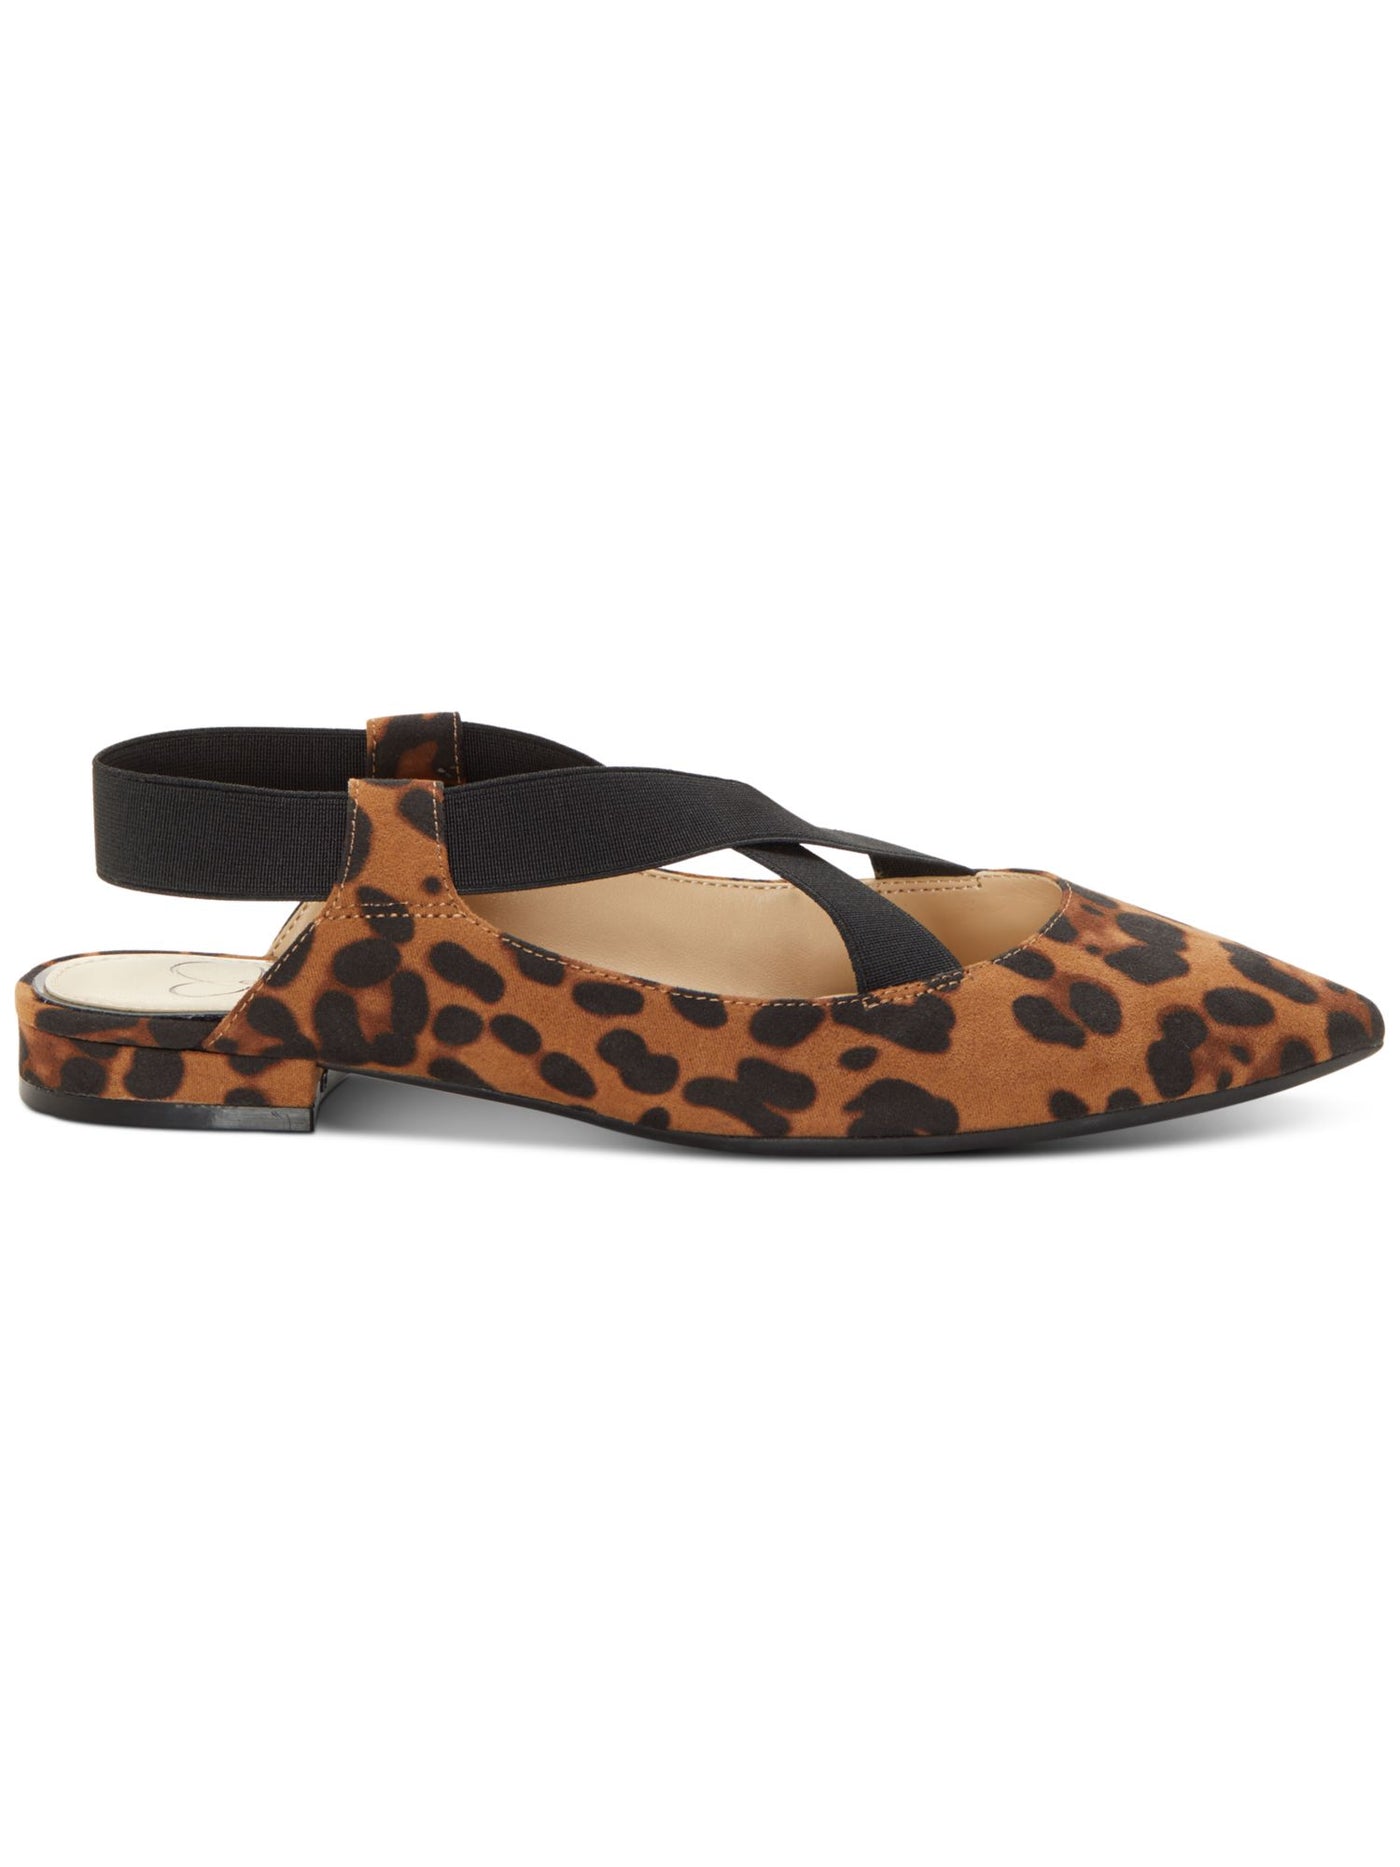 JESSICA SIMPSON Womens Brown Leopard Print 1/2 Heel Slingback Stretch Padded Lurina Pointed Toe Block Heel Slip On Flats Shoes M